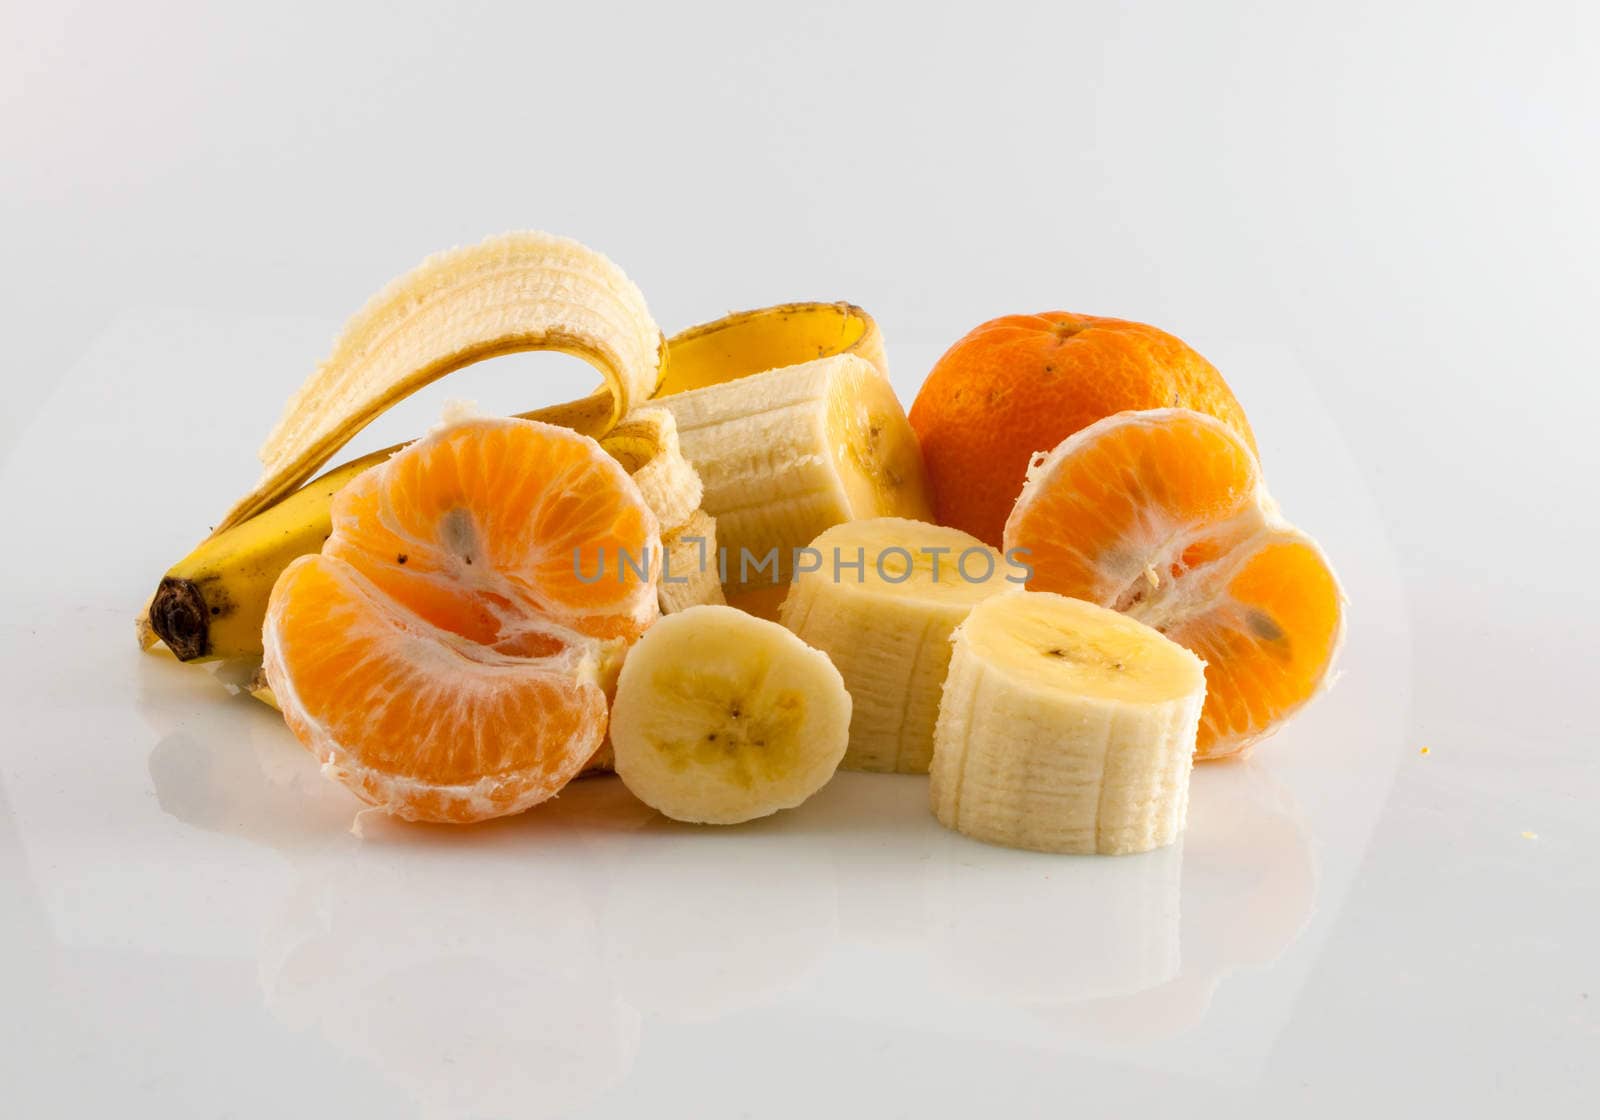 Banana and tangerine isolater on white background